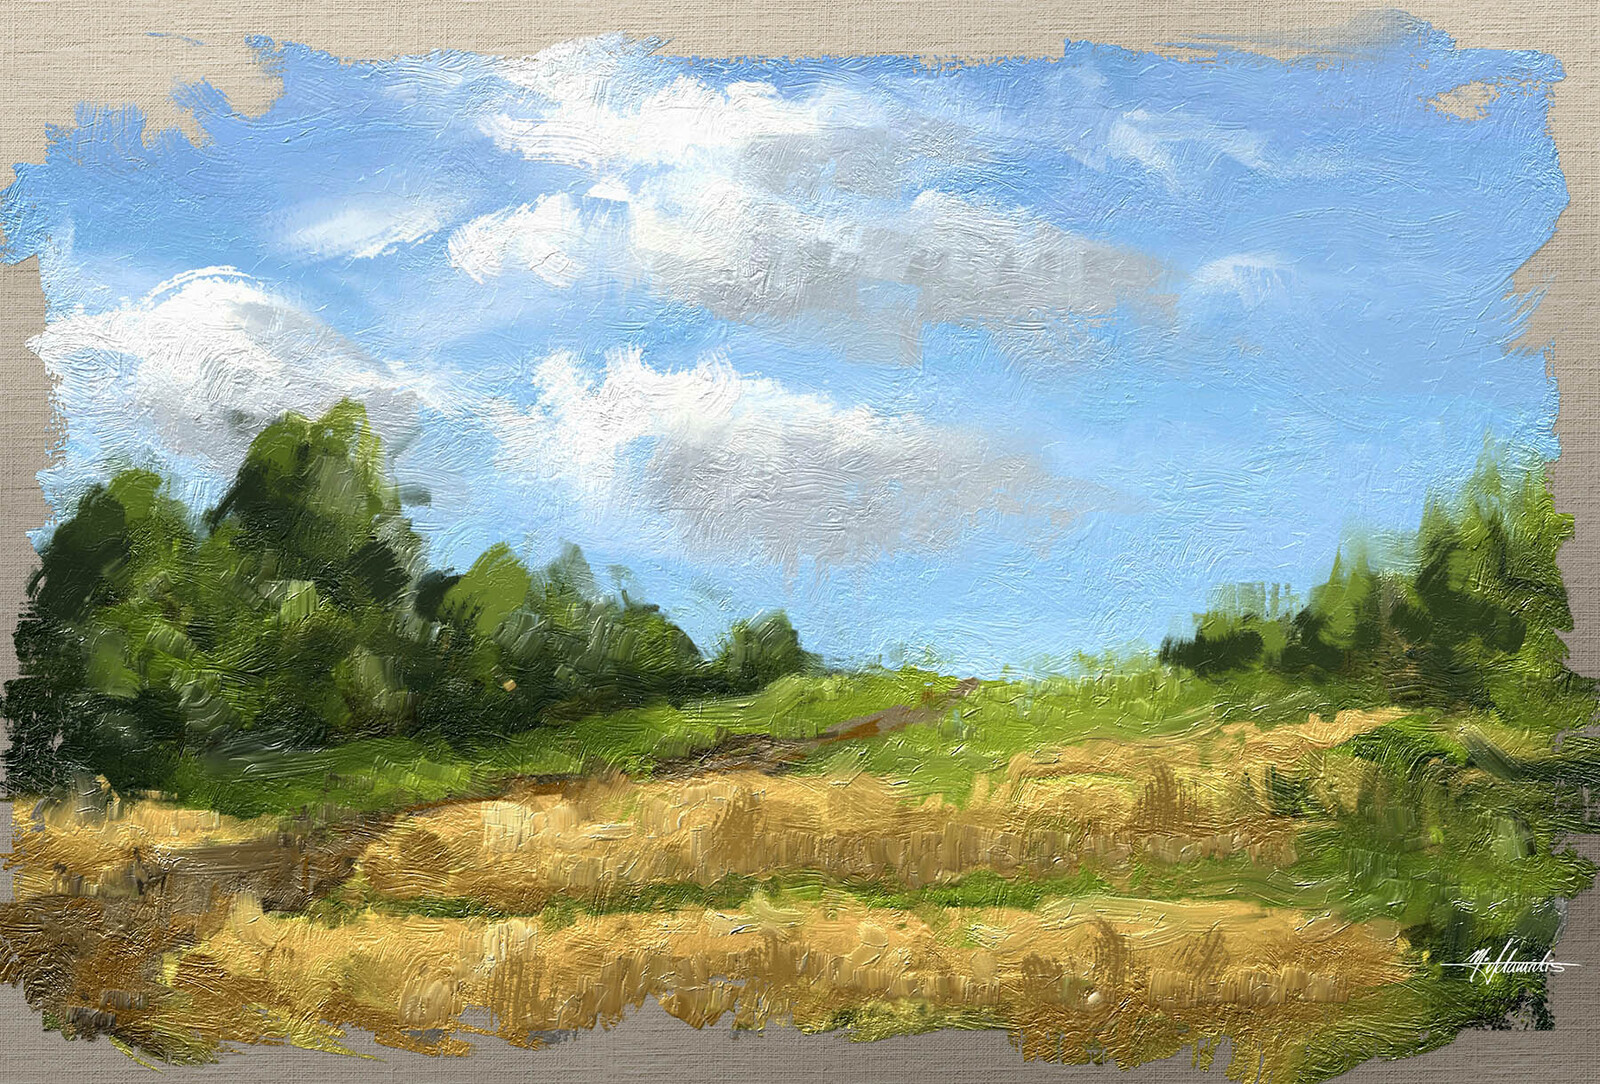 Cornfields - Digital Landscape Art - Oil Artistic Painterly Style